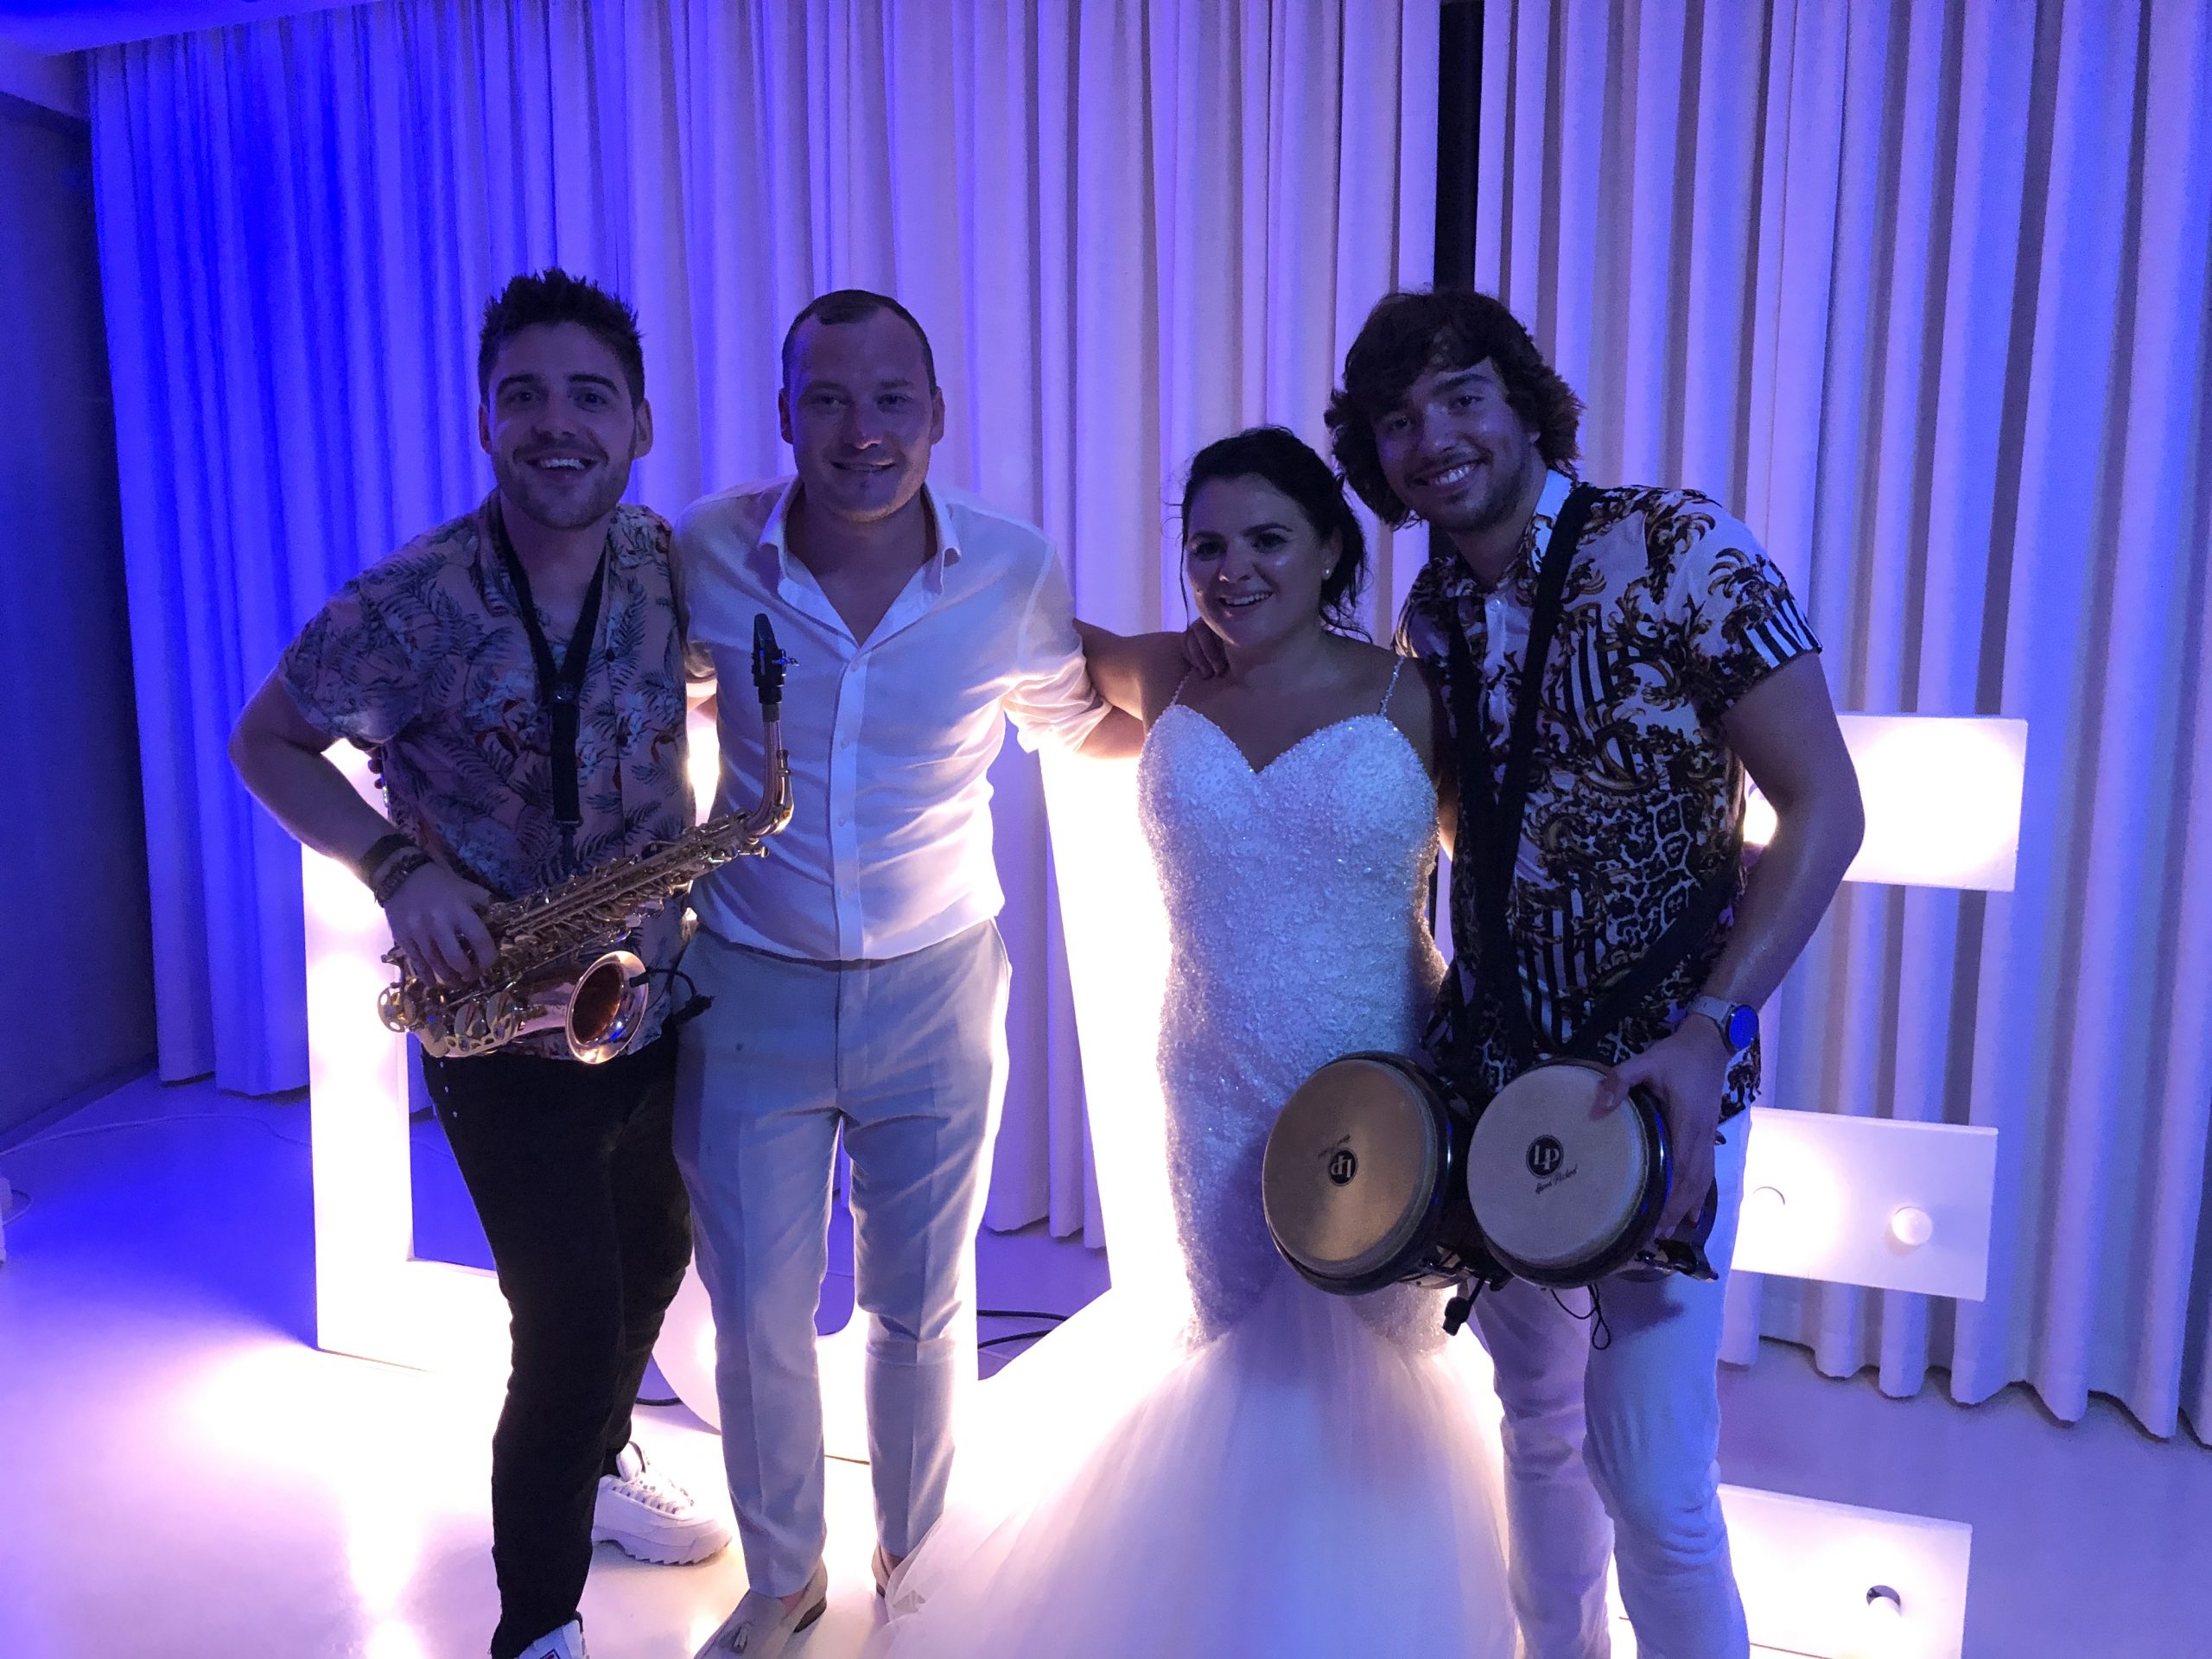 Ibiza wedding saxophone and bongo player at 7pines Ibiza.